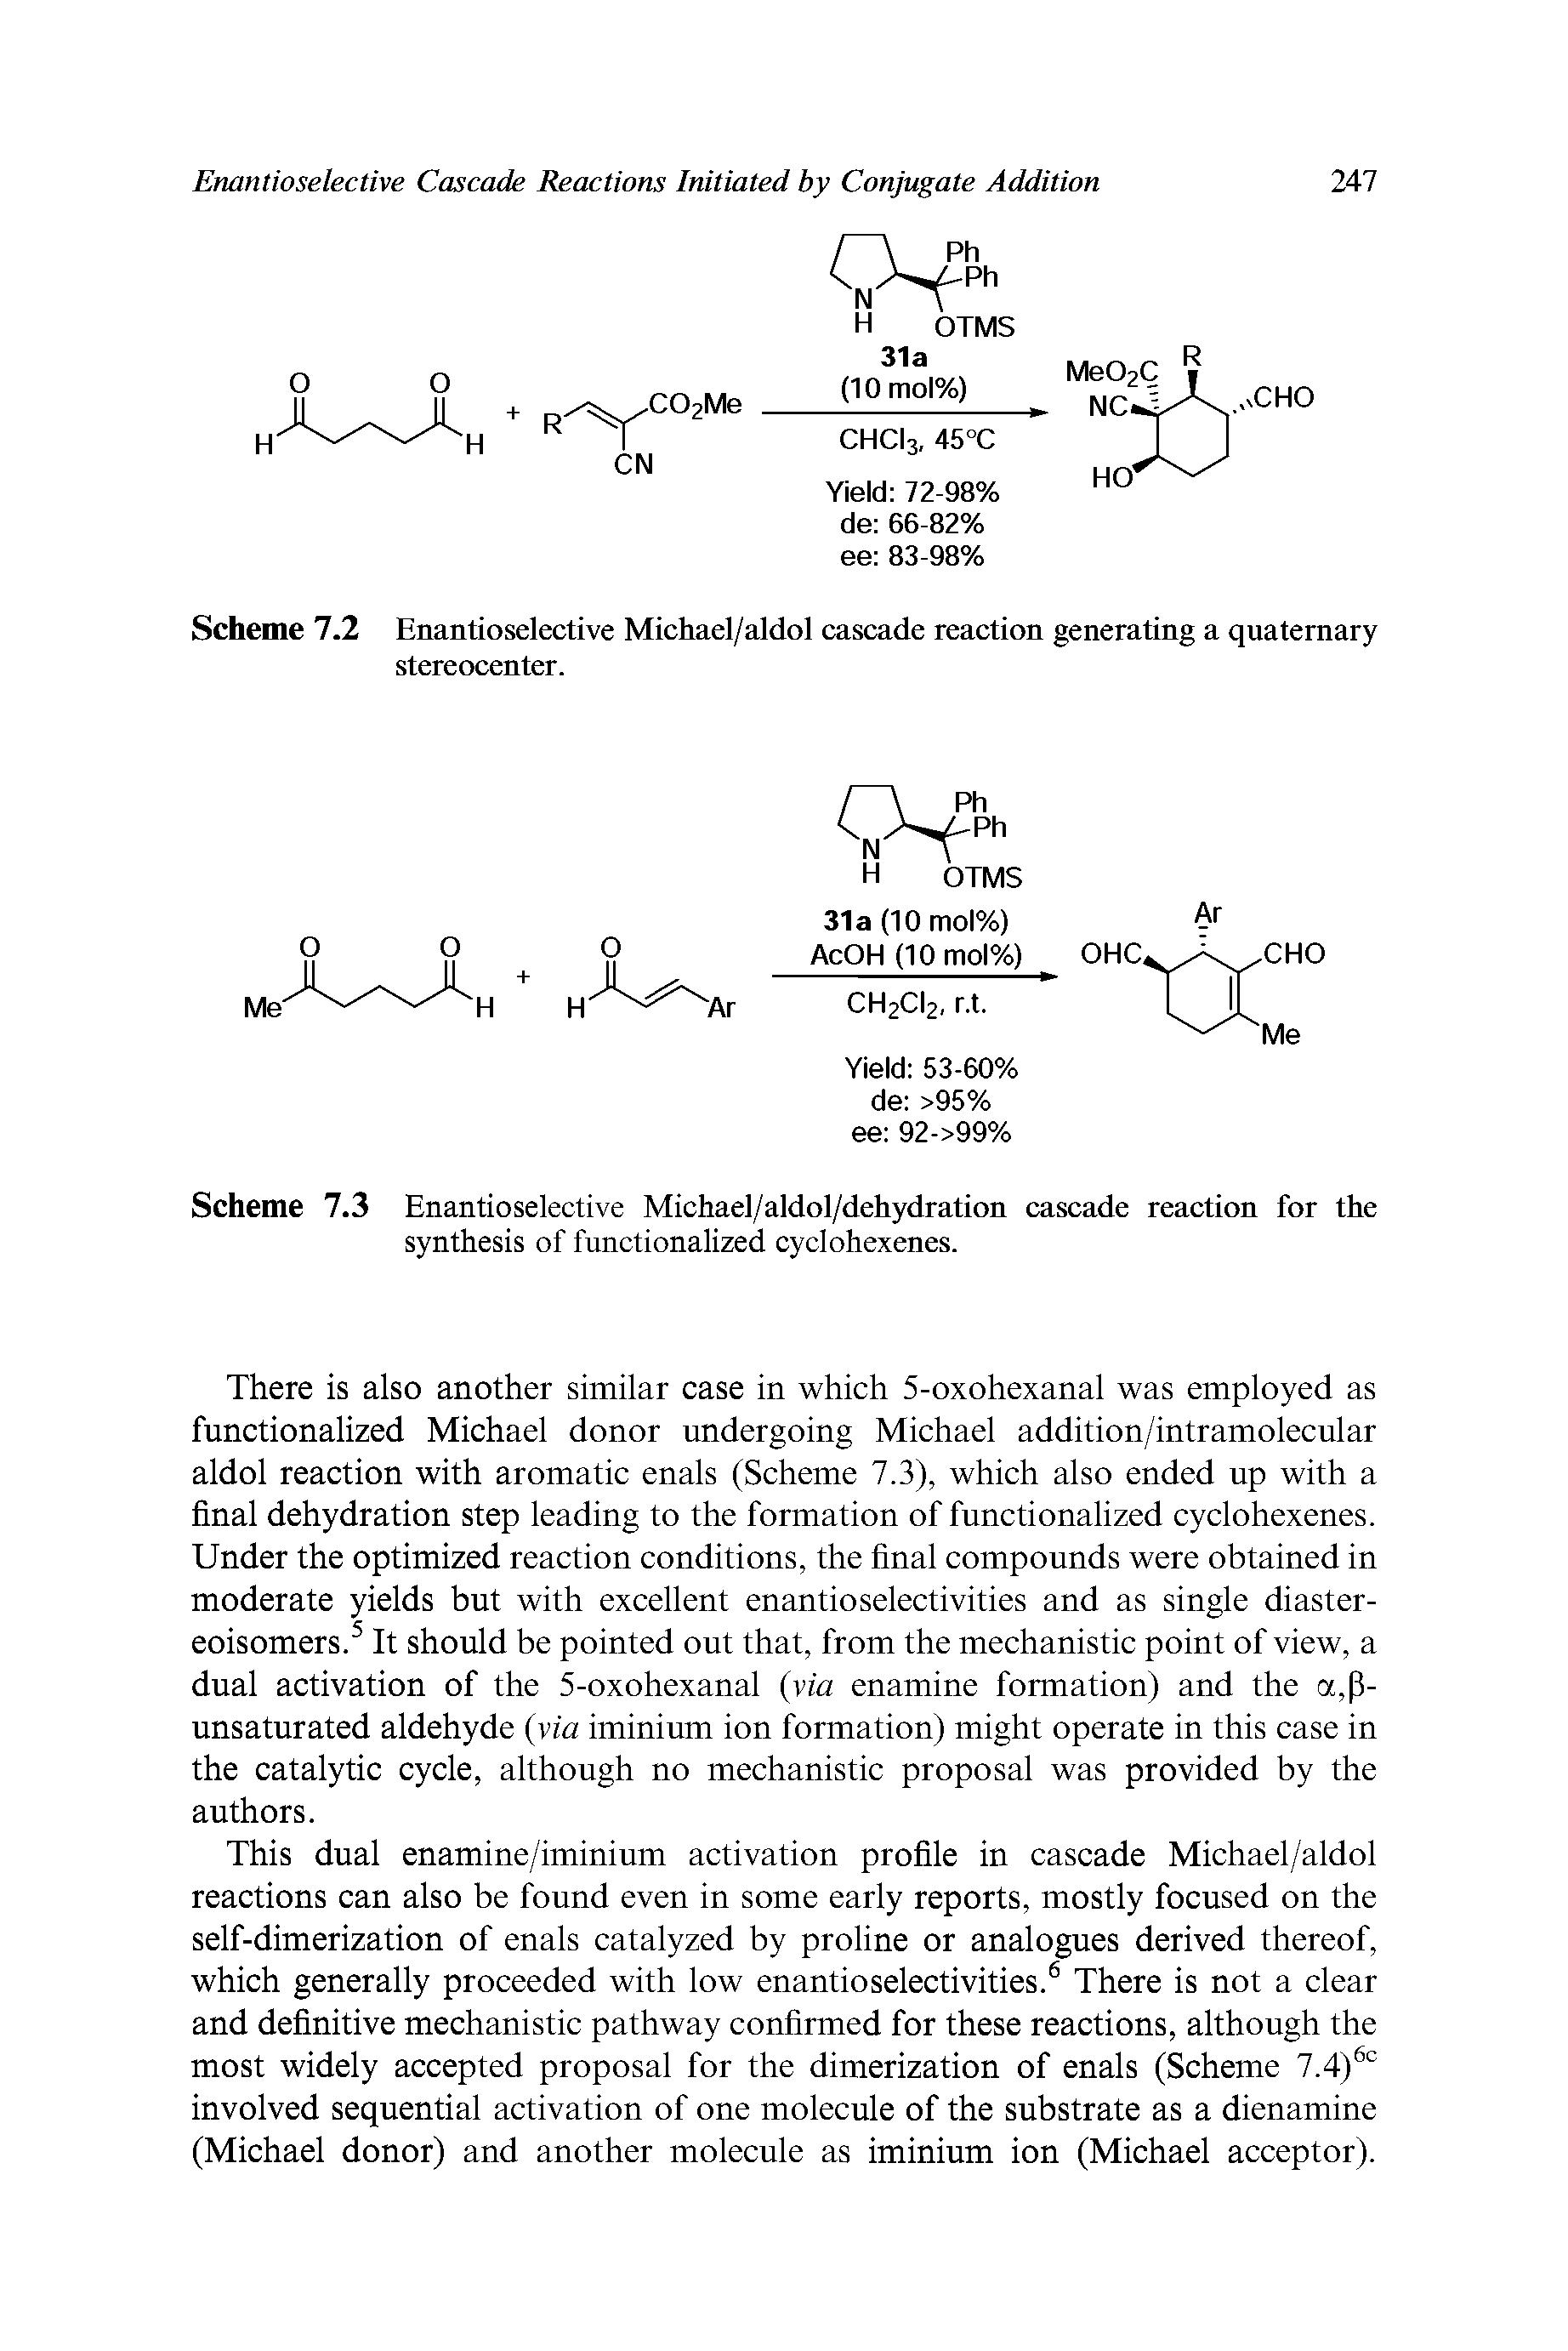 Scheme 1.1 Enantioselective Michael/aldol cascade reaction generating a quaternary stereocenter.